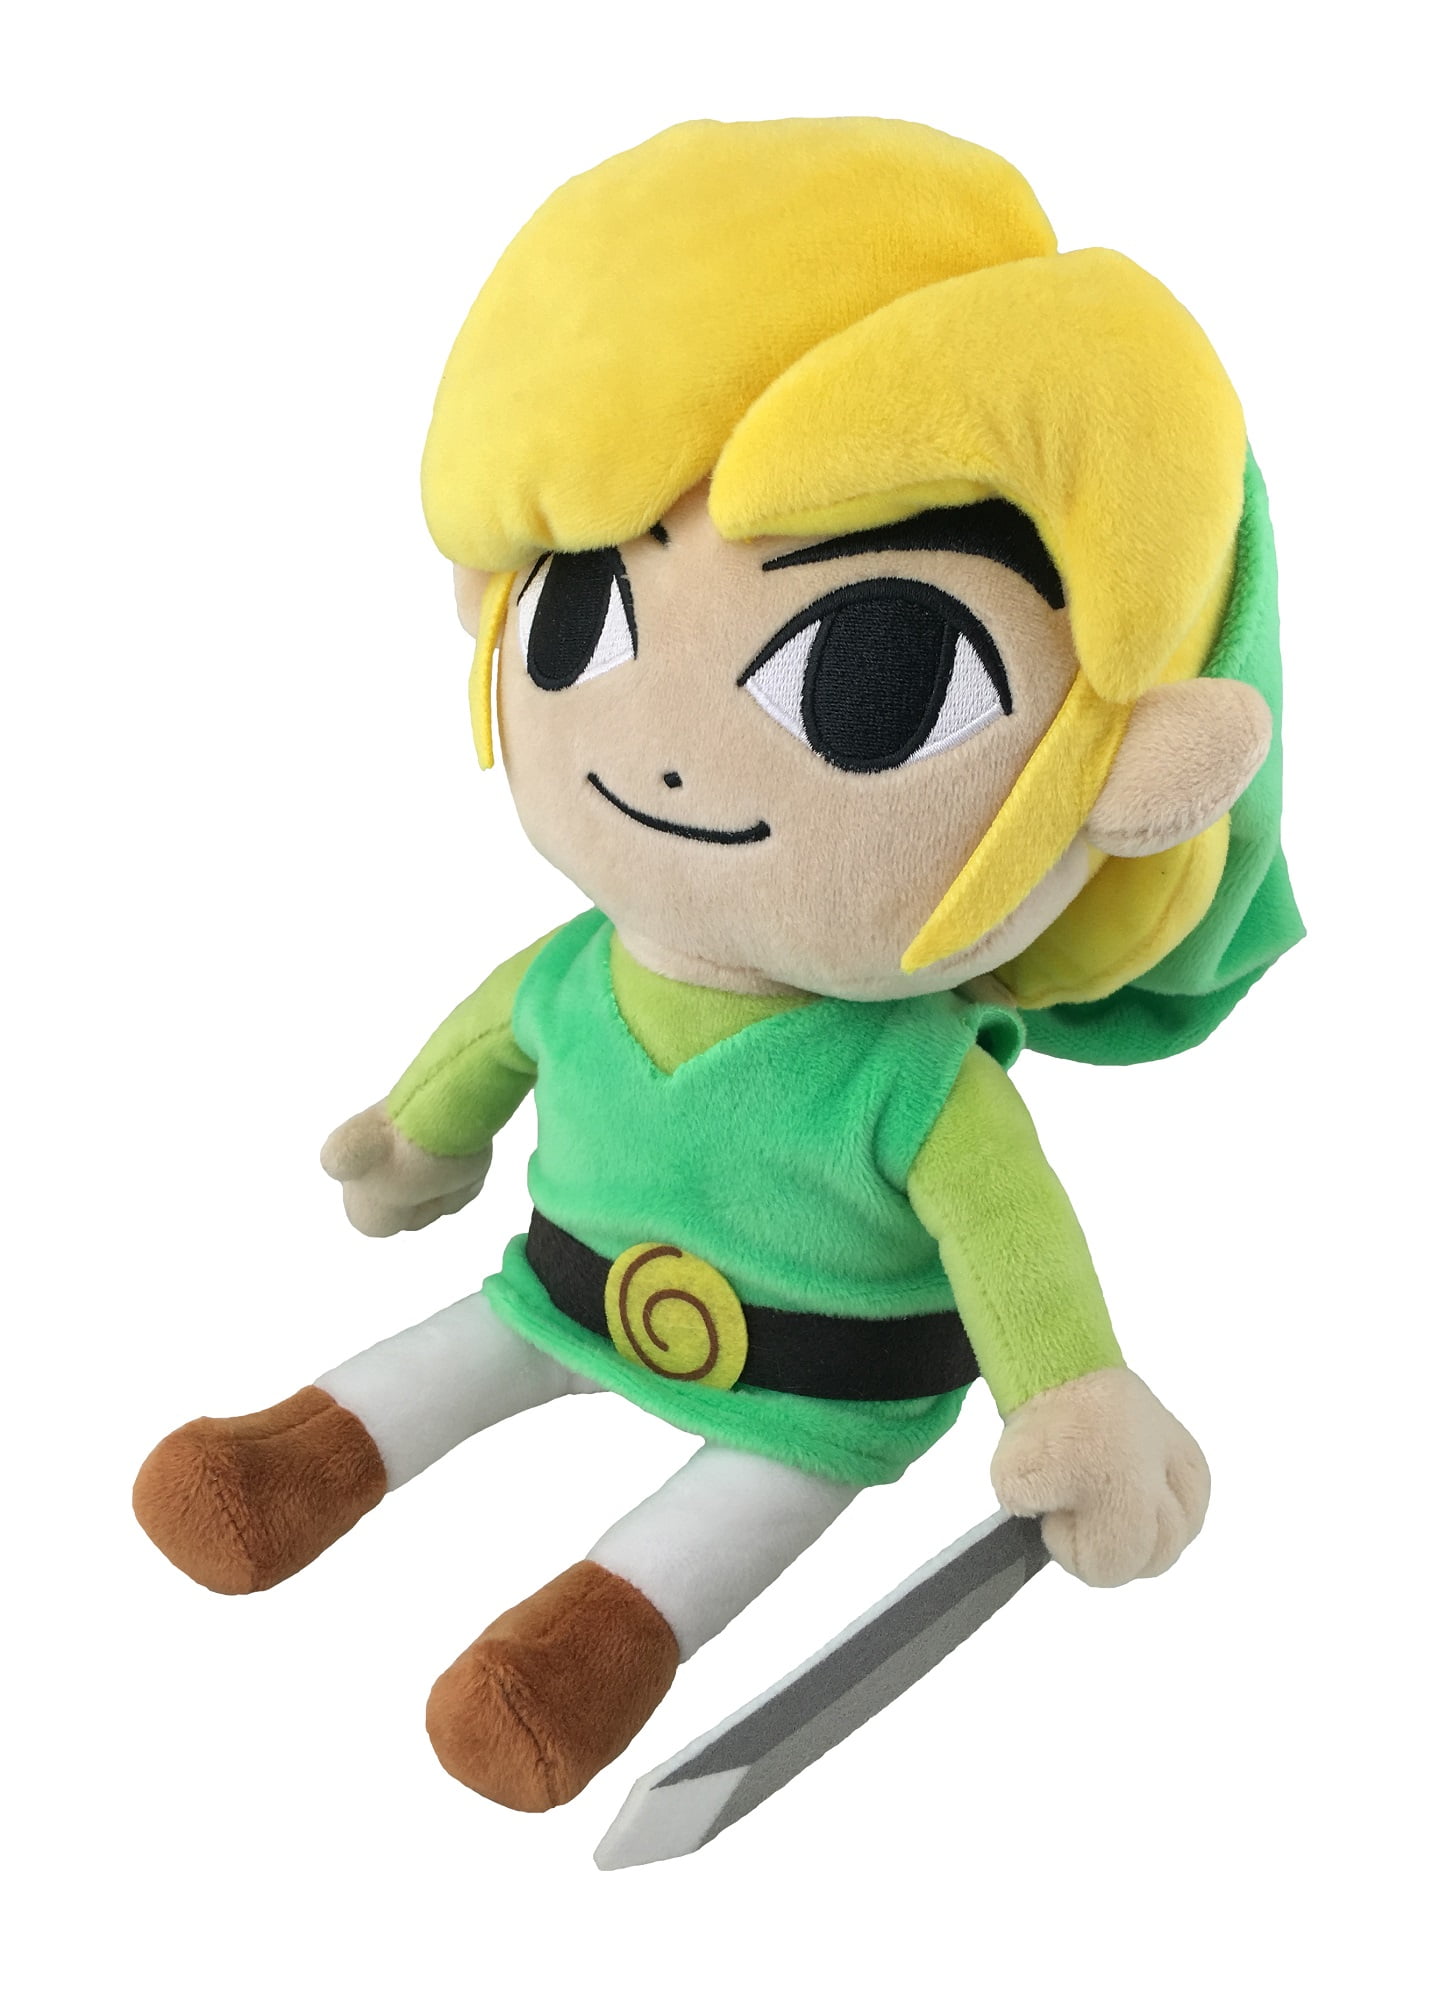 Little Buddy The Legend of Zelda Breath of The Wild Link Stuffed